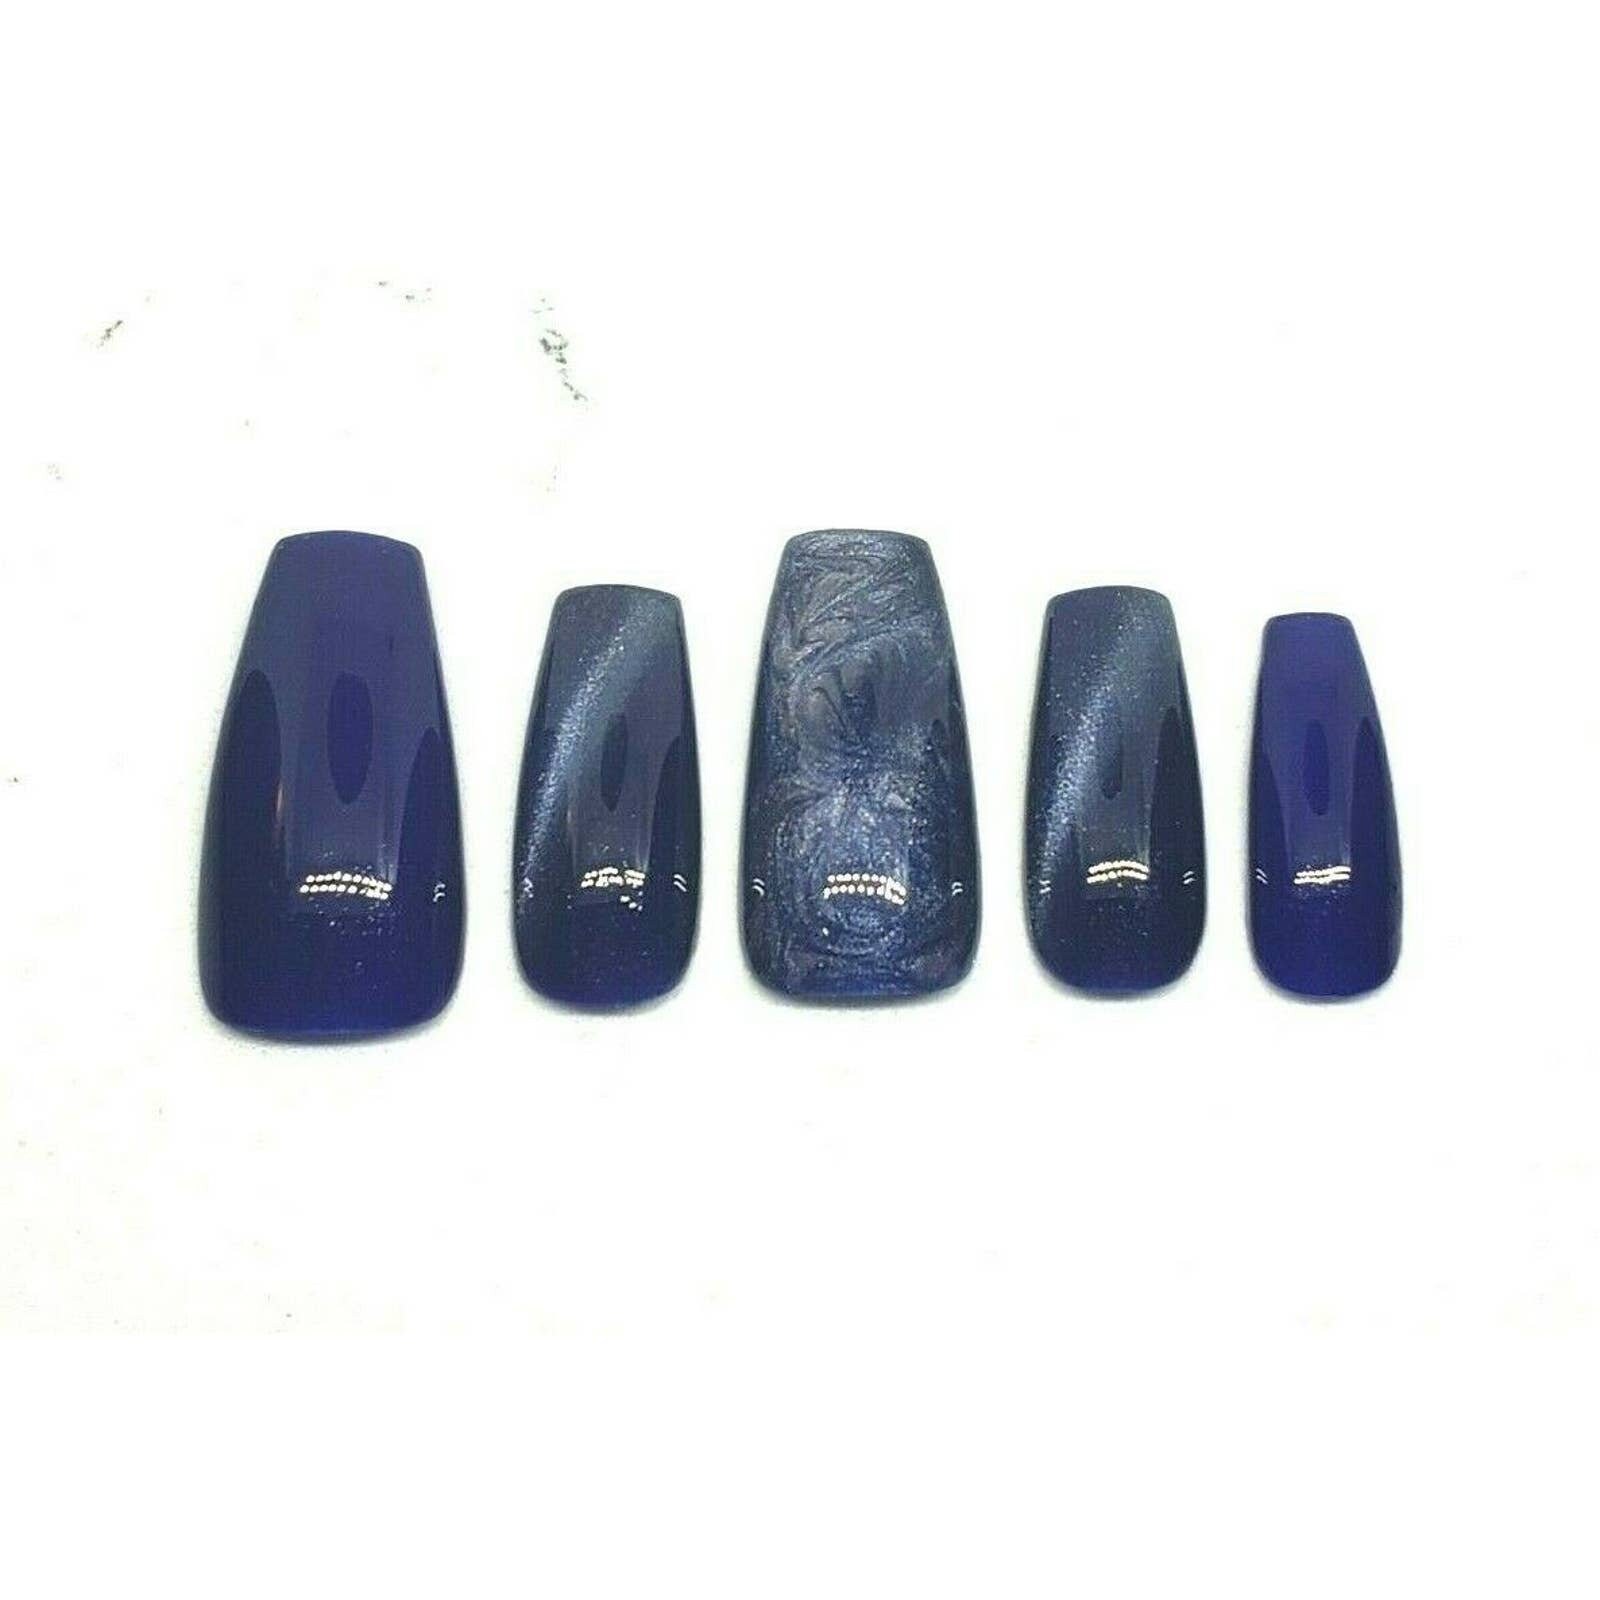 Custom Press On Nails Fake Handmade 20stk Set Nacht Funkeln Blau Wirbel von PolishedPressed